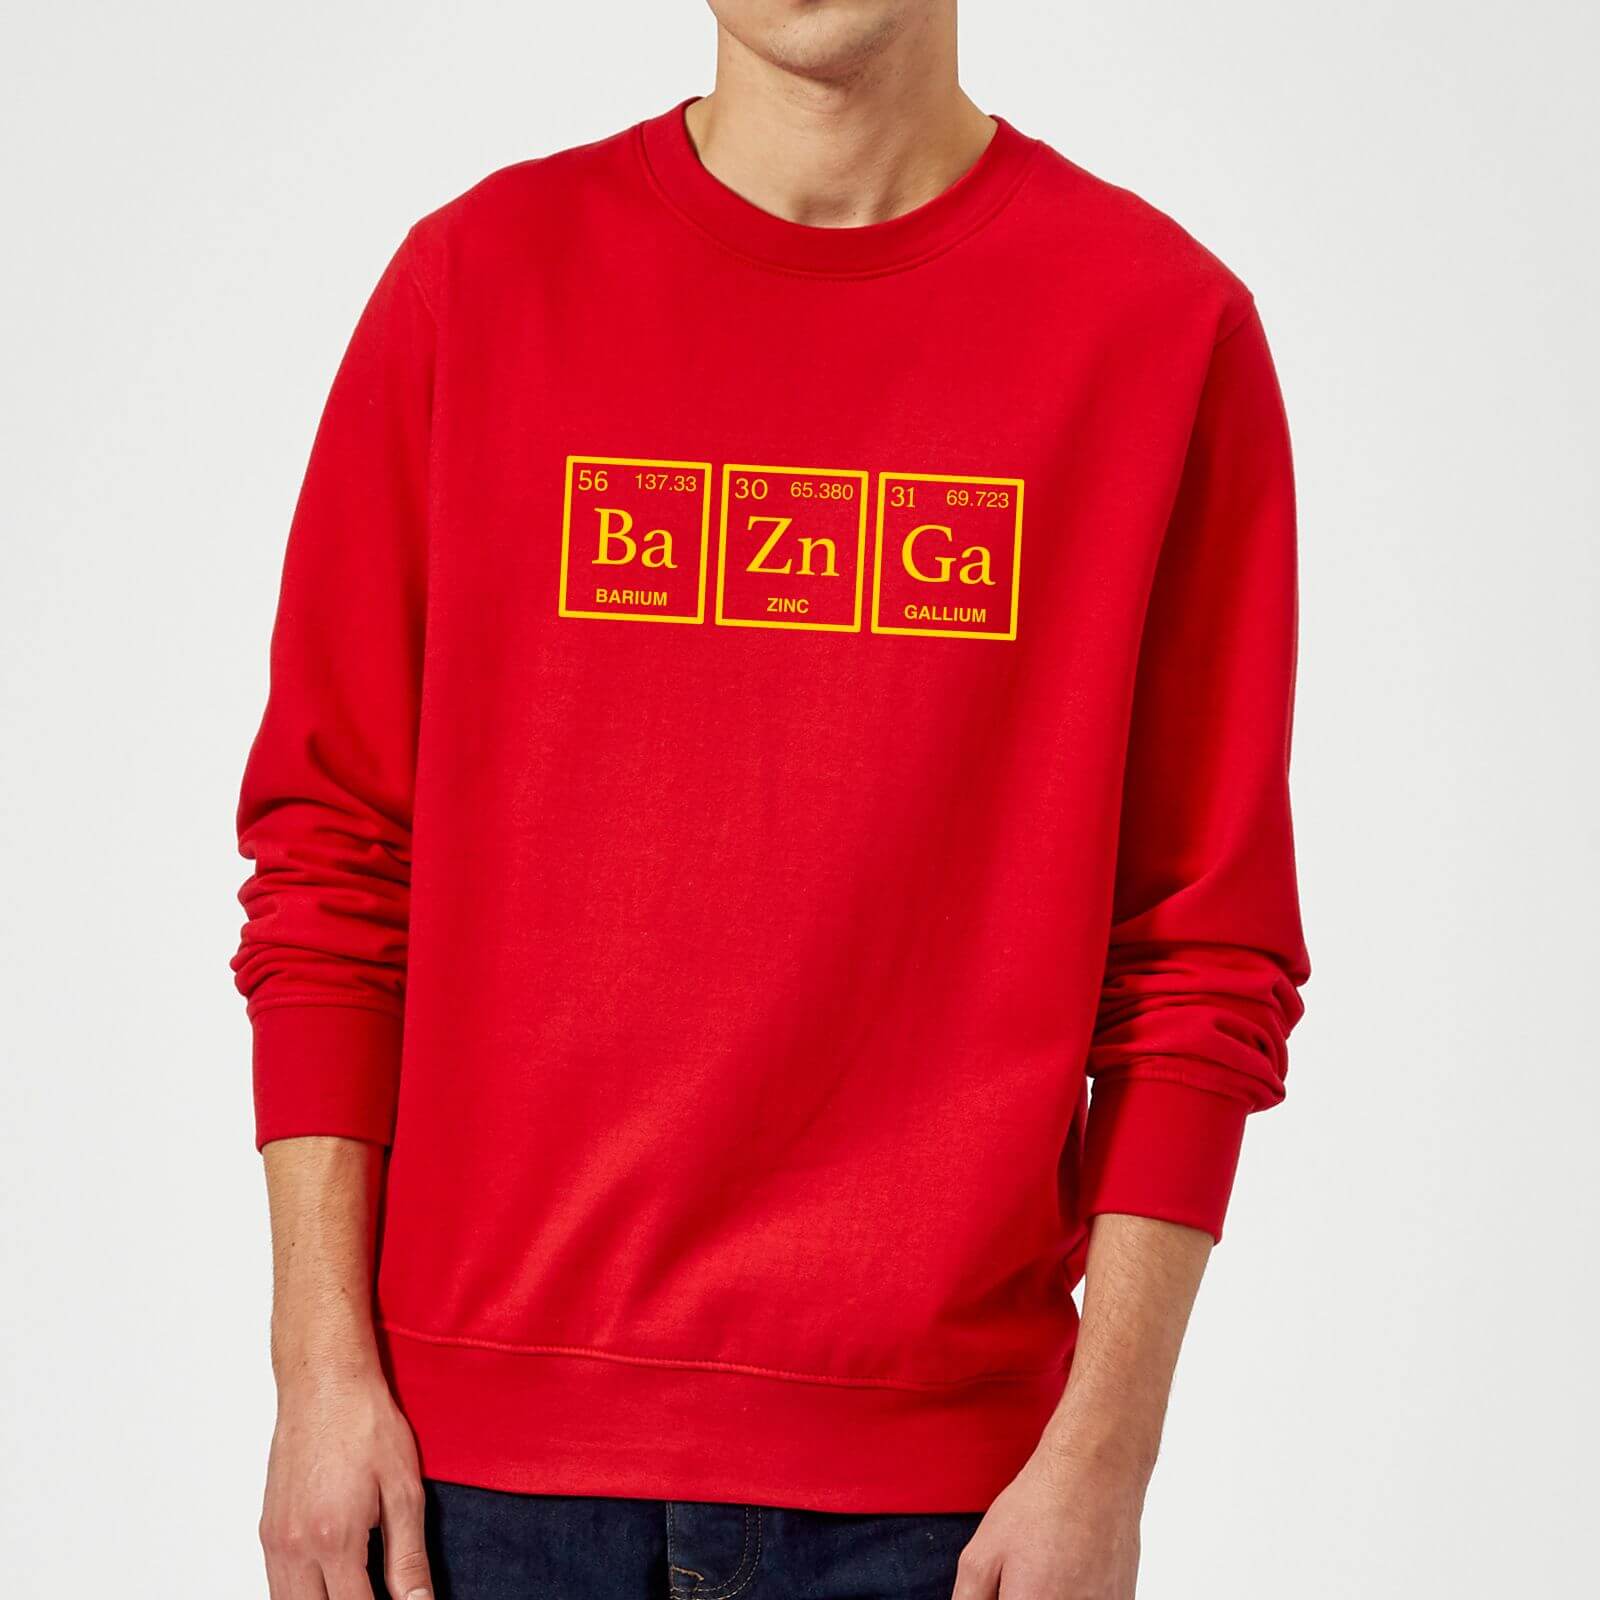 Ba Zn Ga Sweatshirt - Red - M - Red